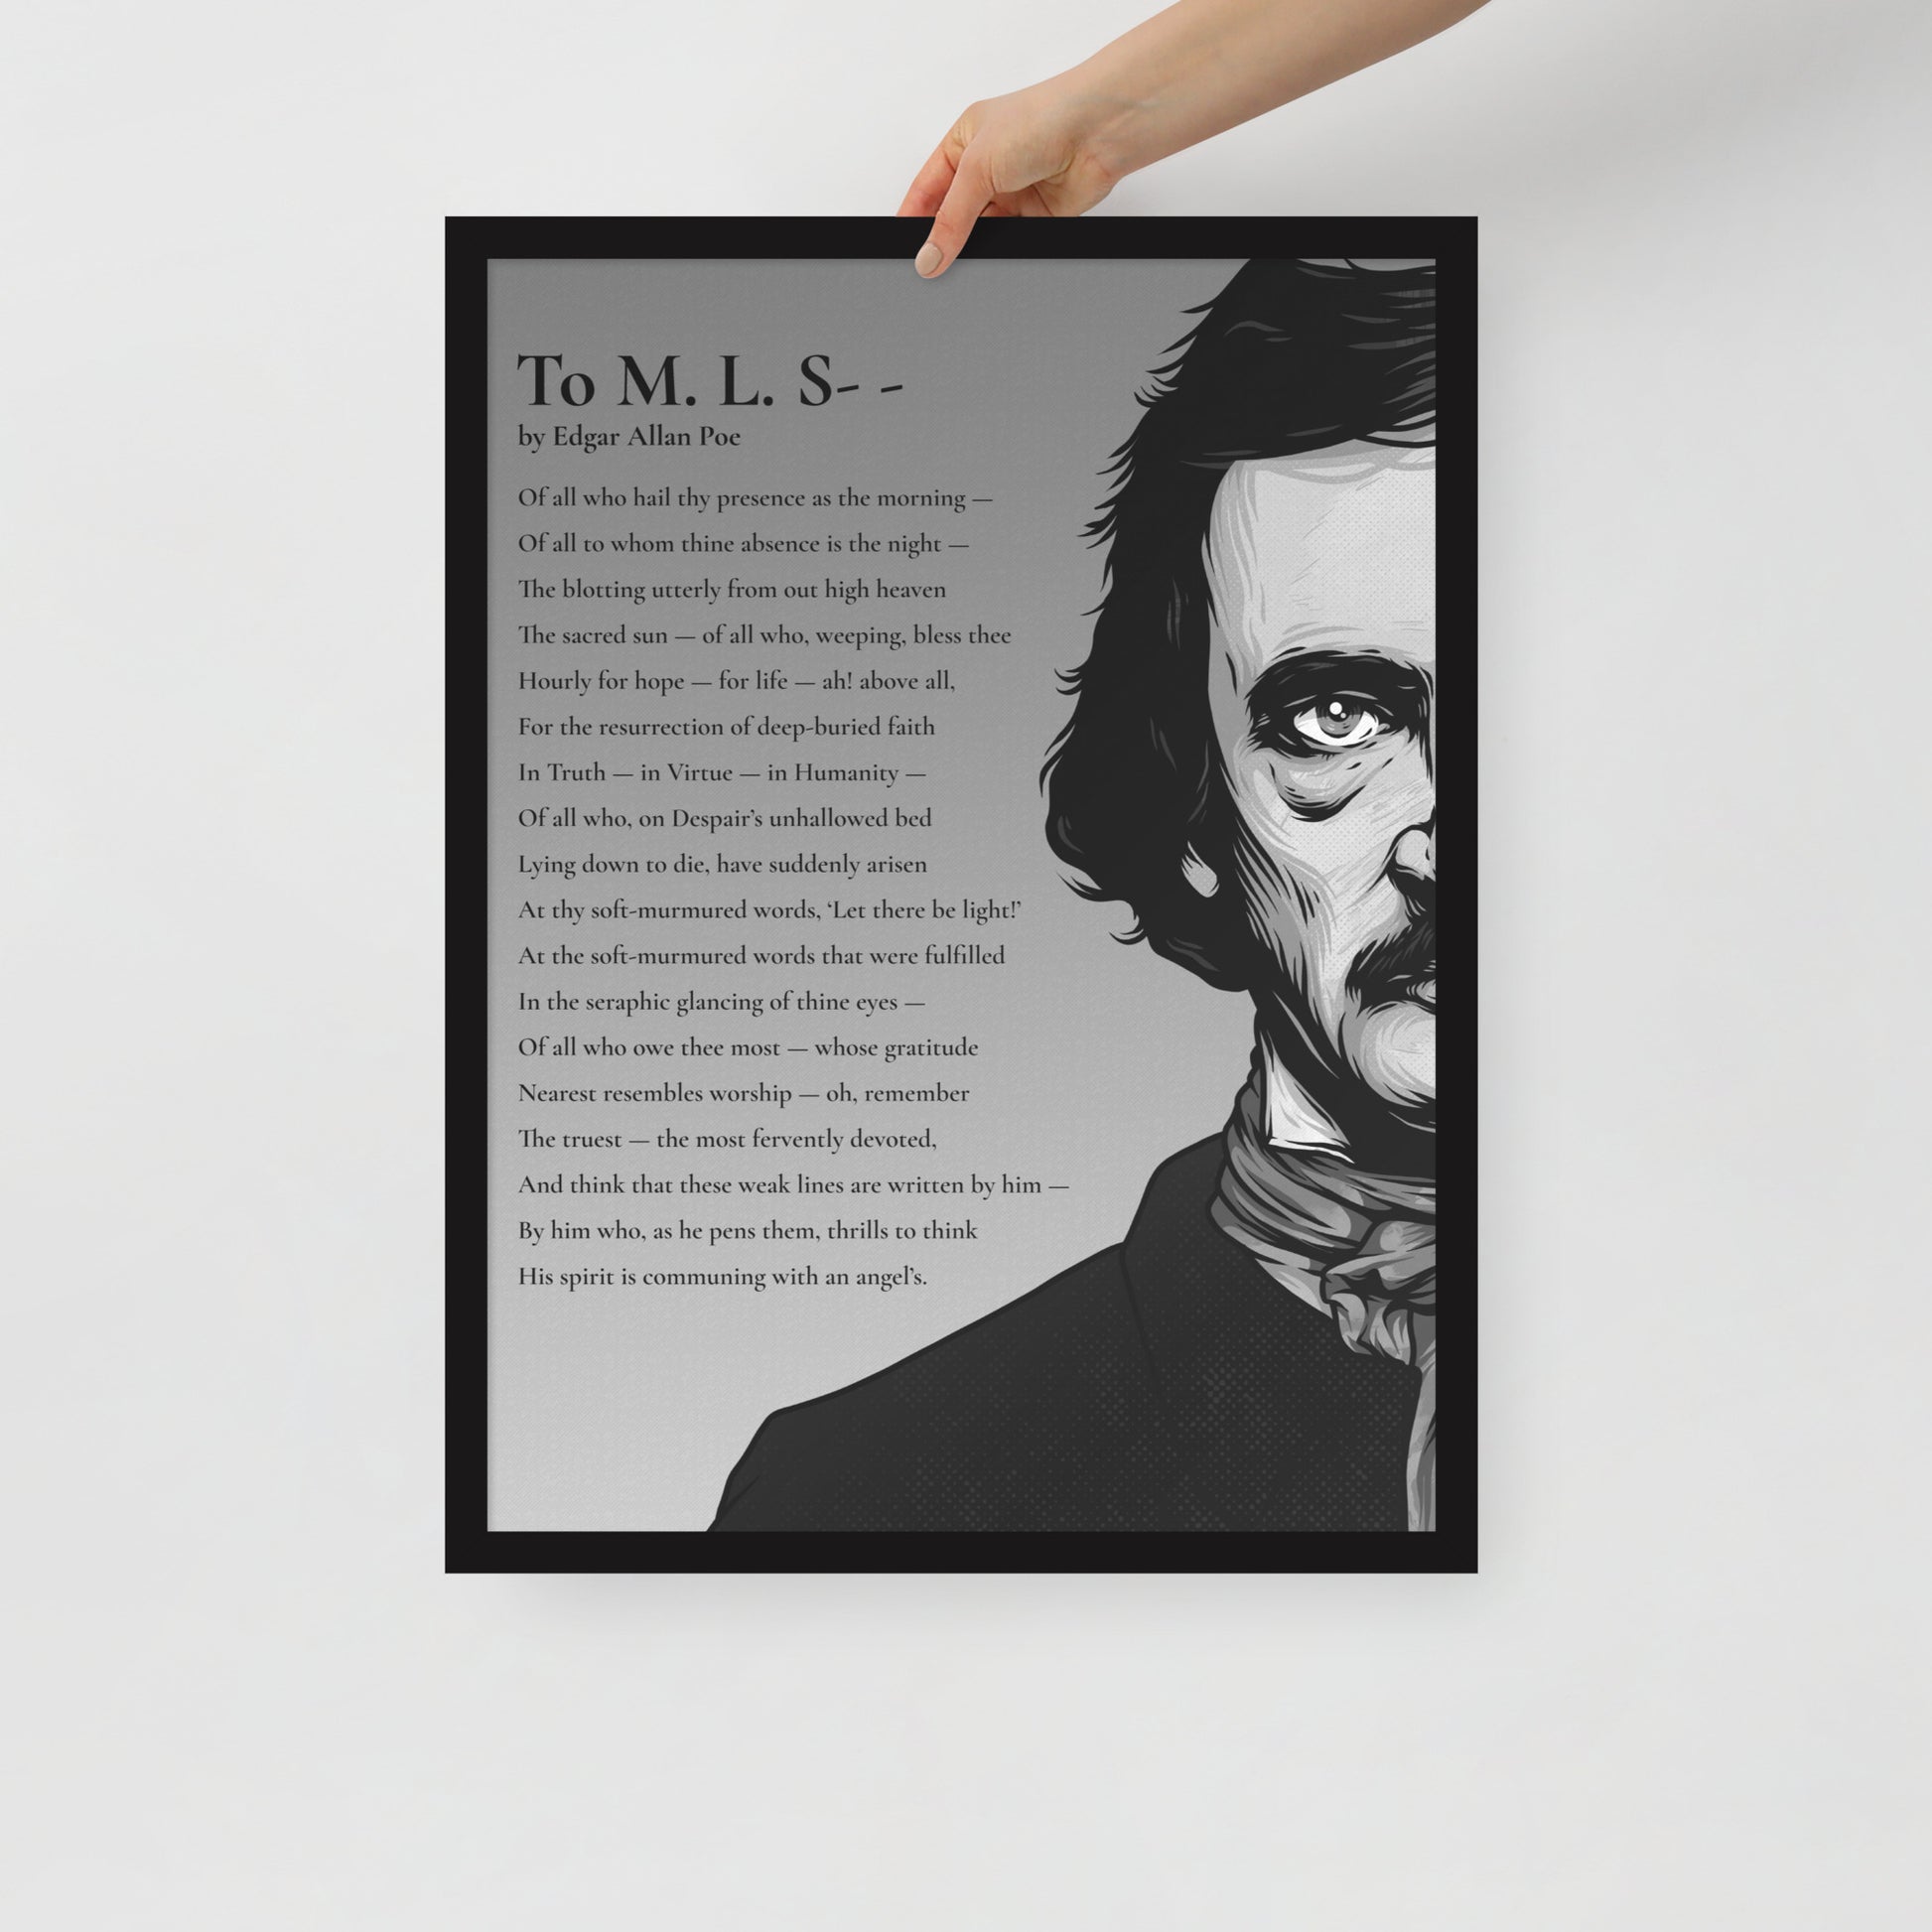 Edgar Allan Poe's 'To M. L. S--' Framed Matted Poster - 18 x 24 Black Frame